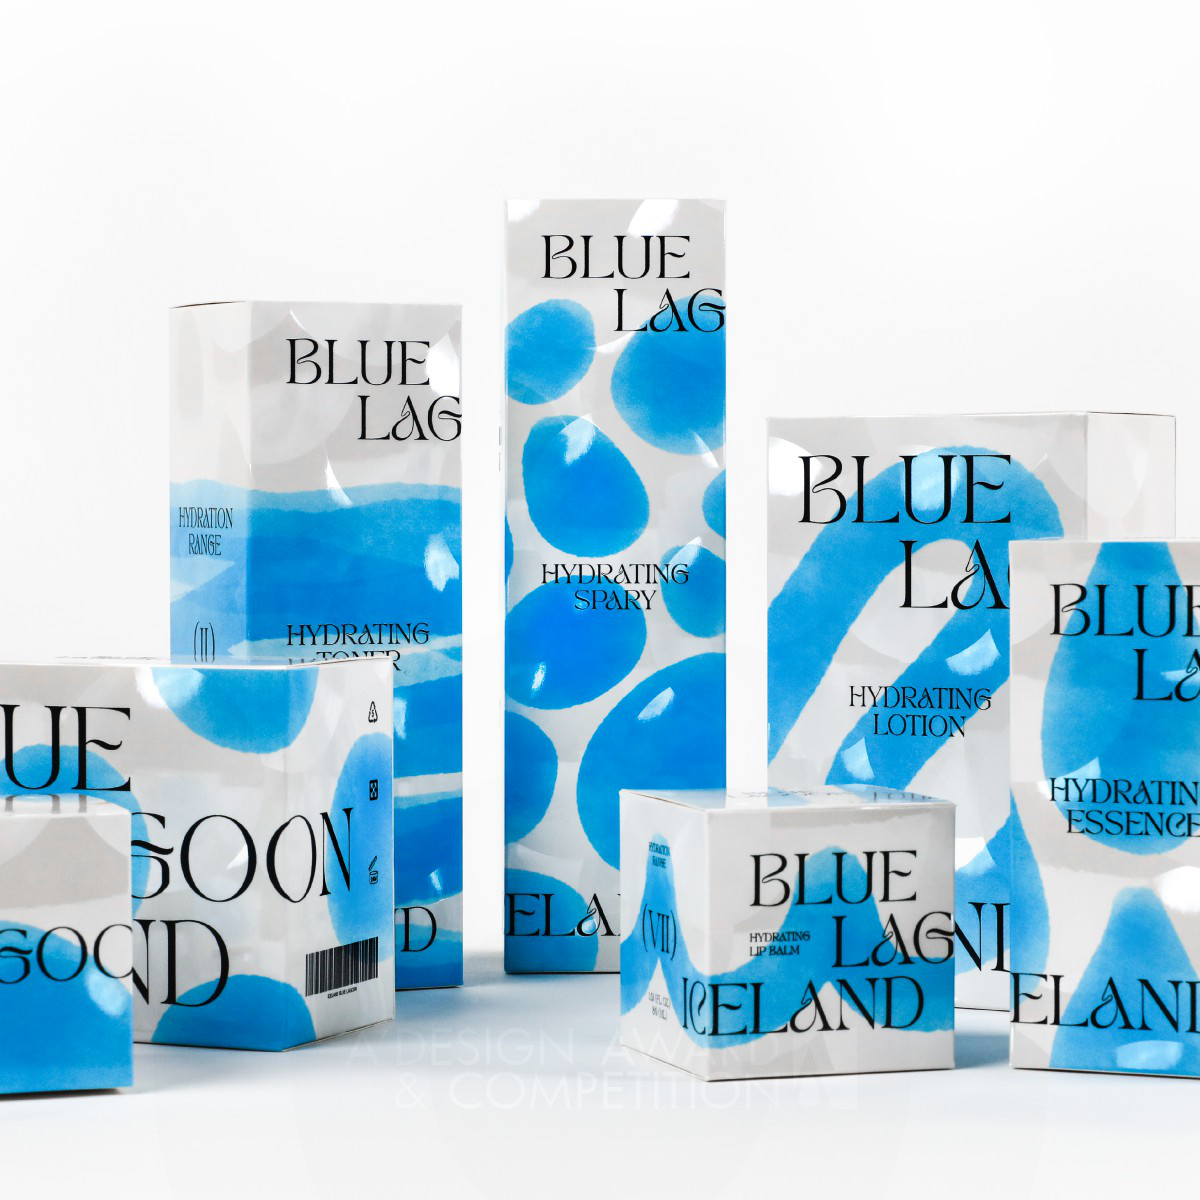 Blue Lagoon Iceland Packaging by Zu Hao Zhang - K Laser Design Lab Iron Packaging Design Award Winner 2024 